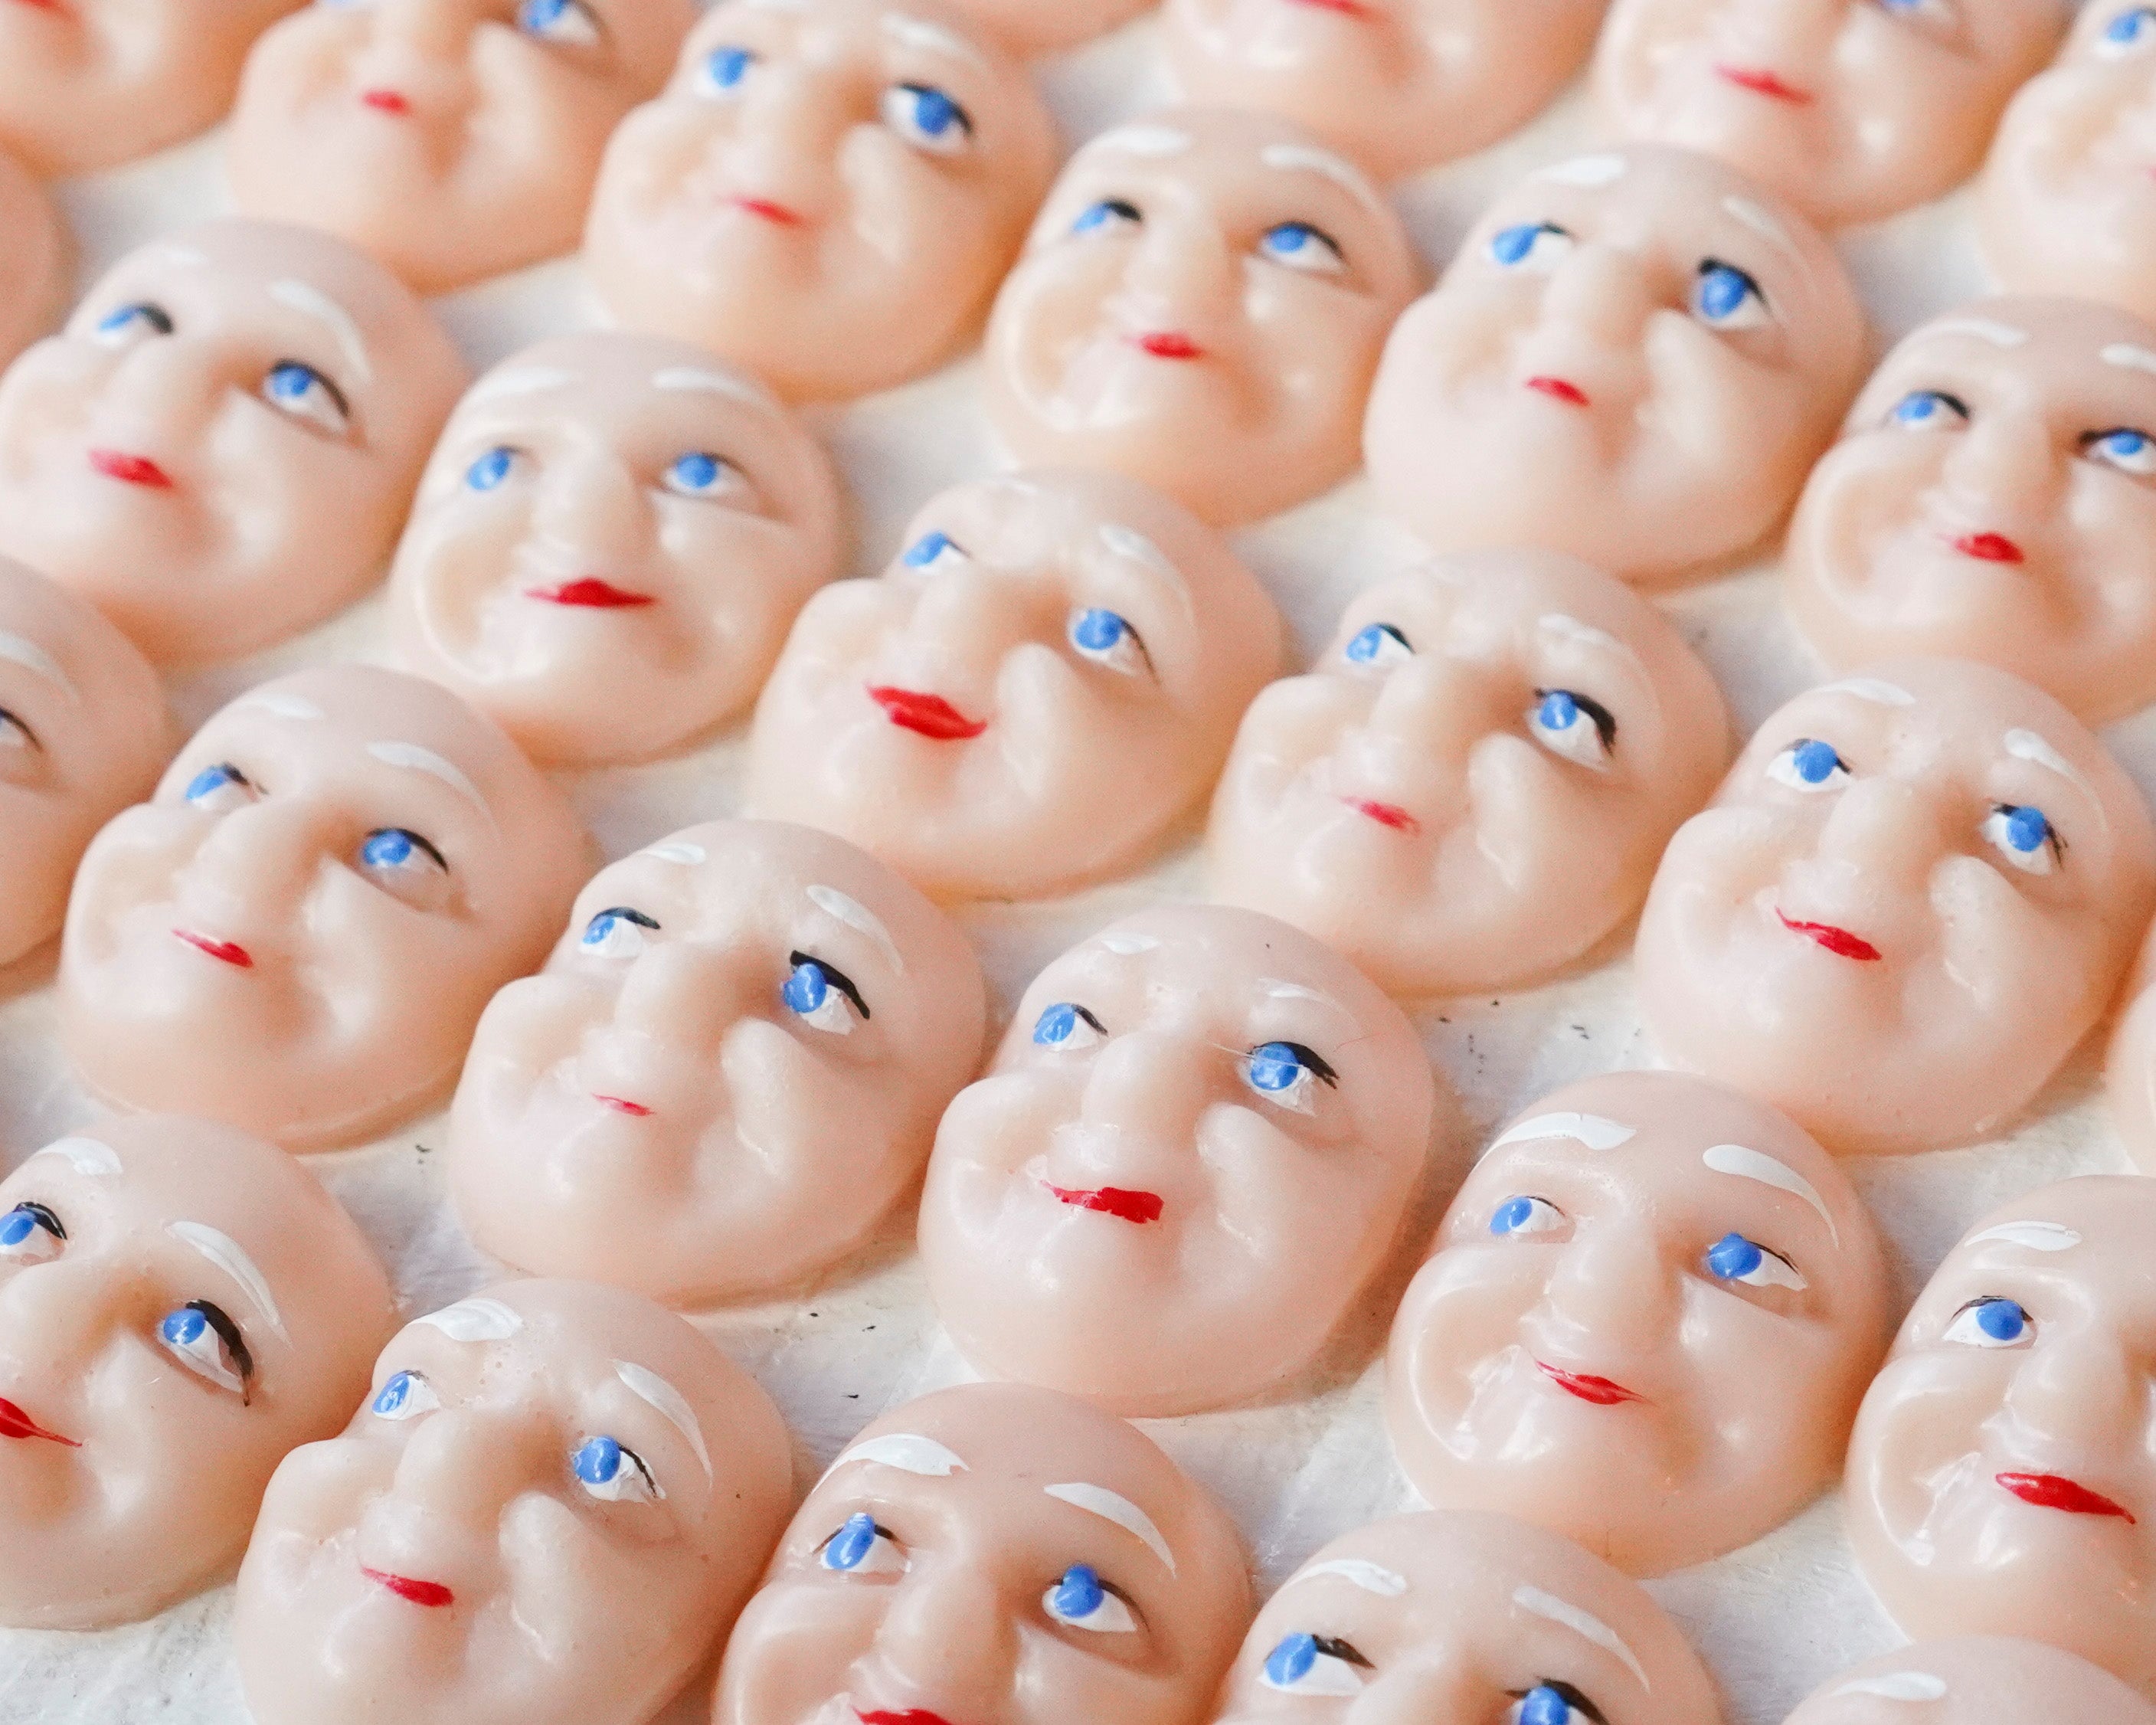 Elf Faces, Cream - Miniature Plastic Face Cabochons for Crafts, 12 Pcs.